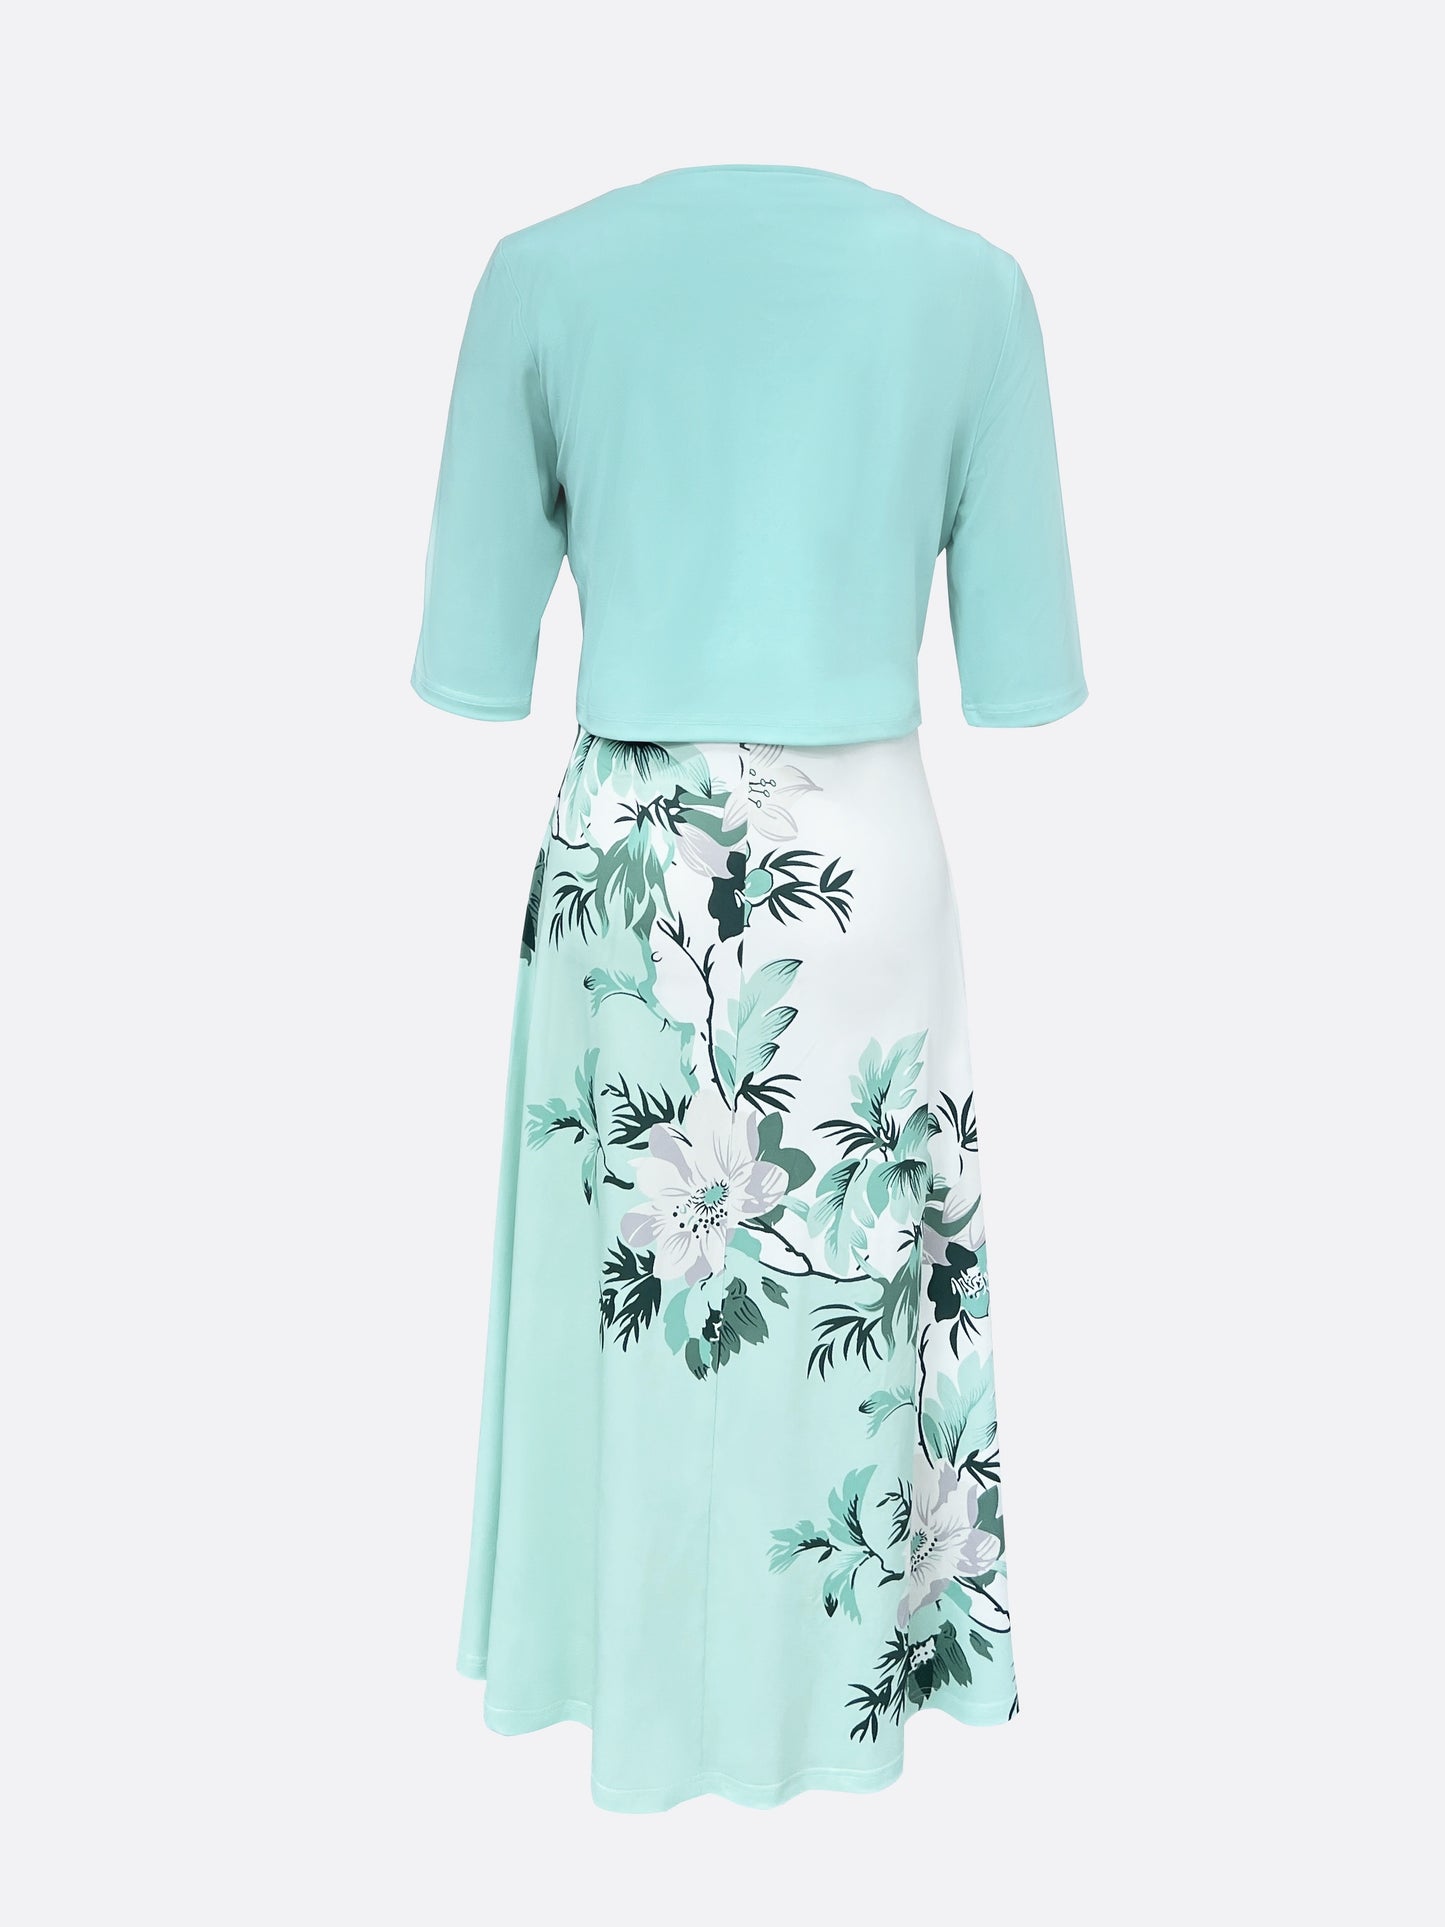 Antmvs Elegant Two-piece Dress Set, Crop Half Sleeve Top & Floral Print Tank Dress Outfits, Women's Clothing